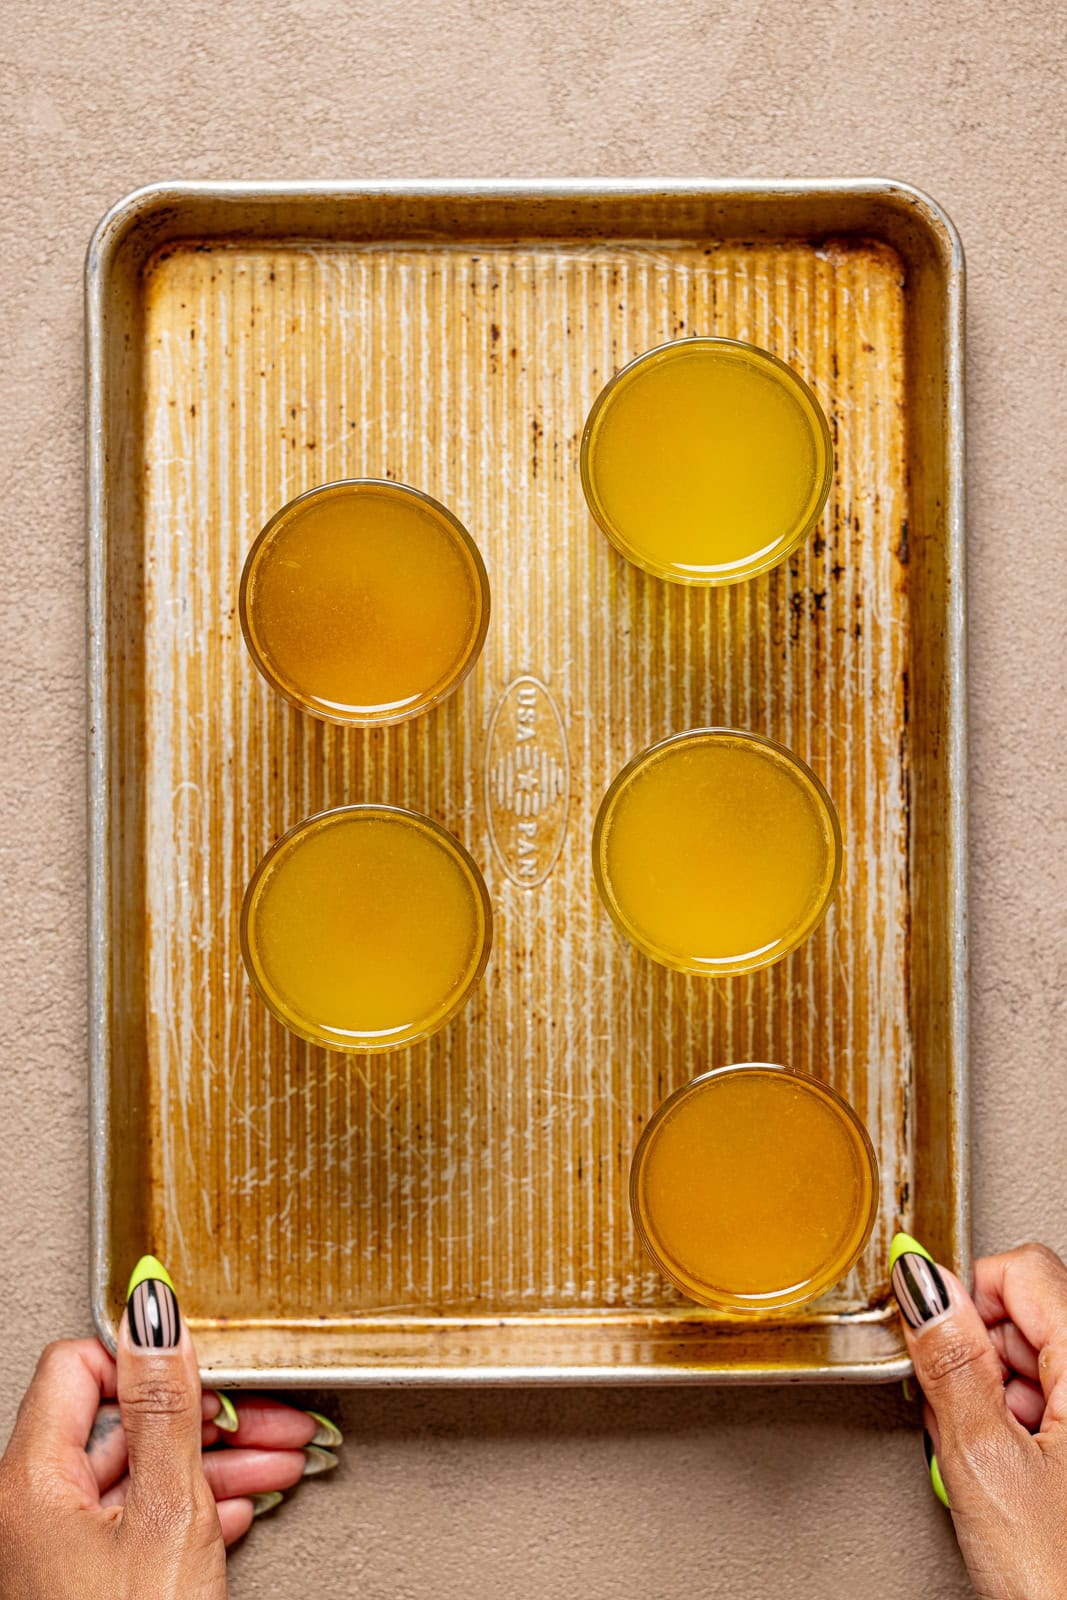 Lemon drop shots in glasses on a baking sheet being held.